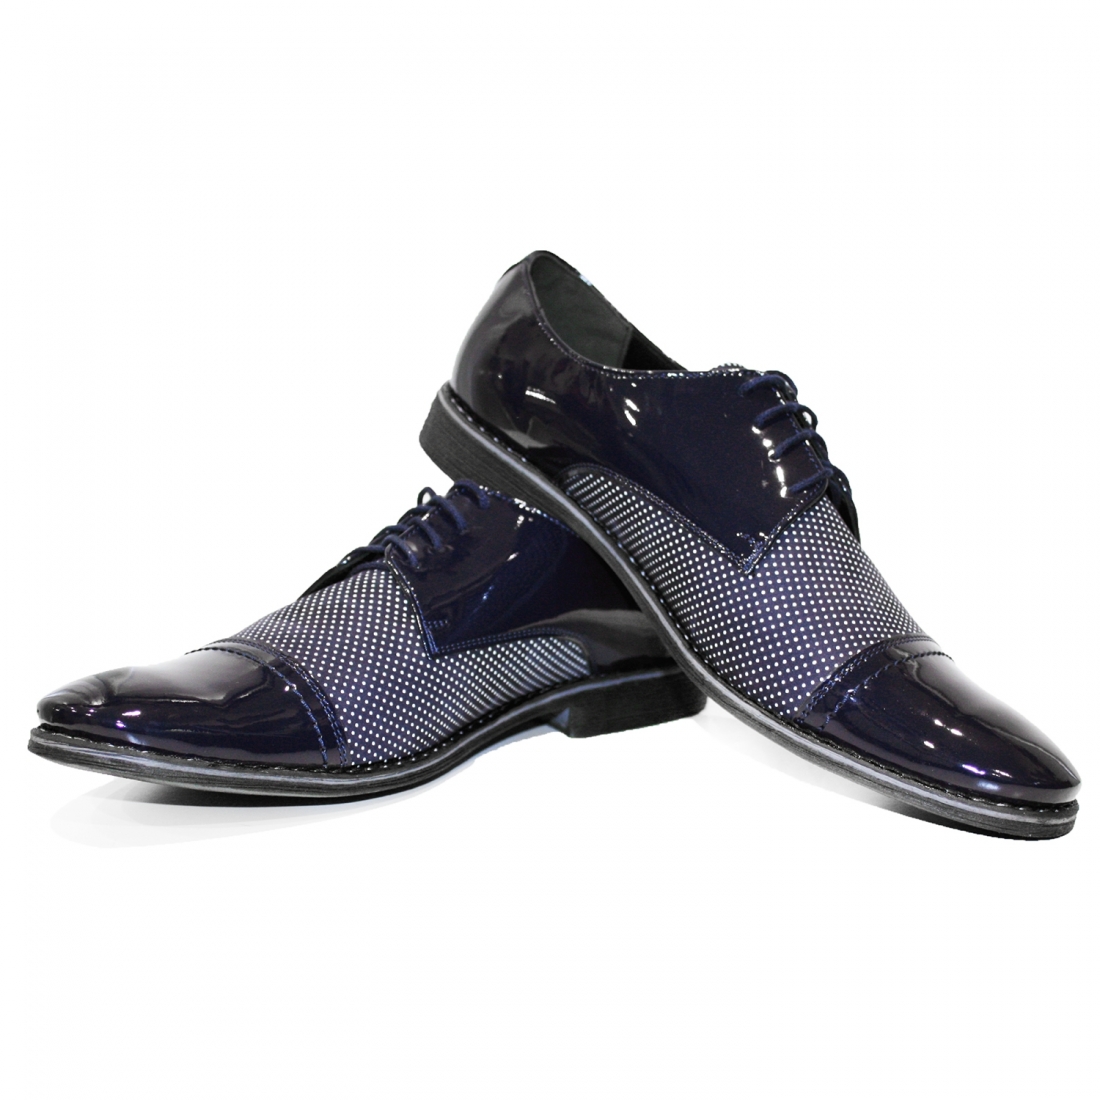 Modello Croppero - Классическая обувь - Handmade Colorful Italian Leather Shoes